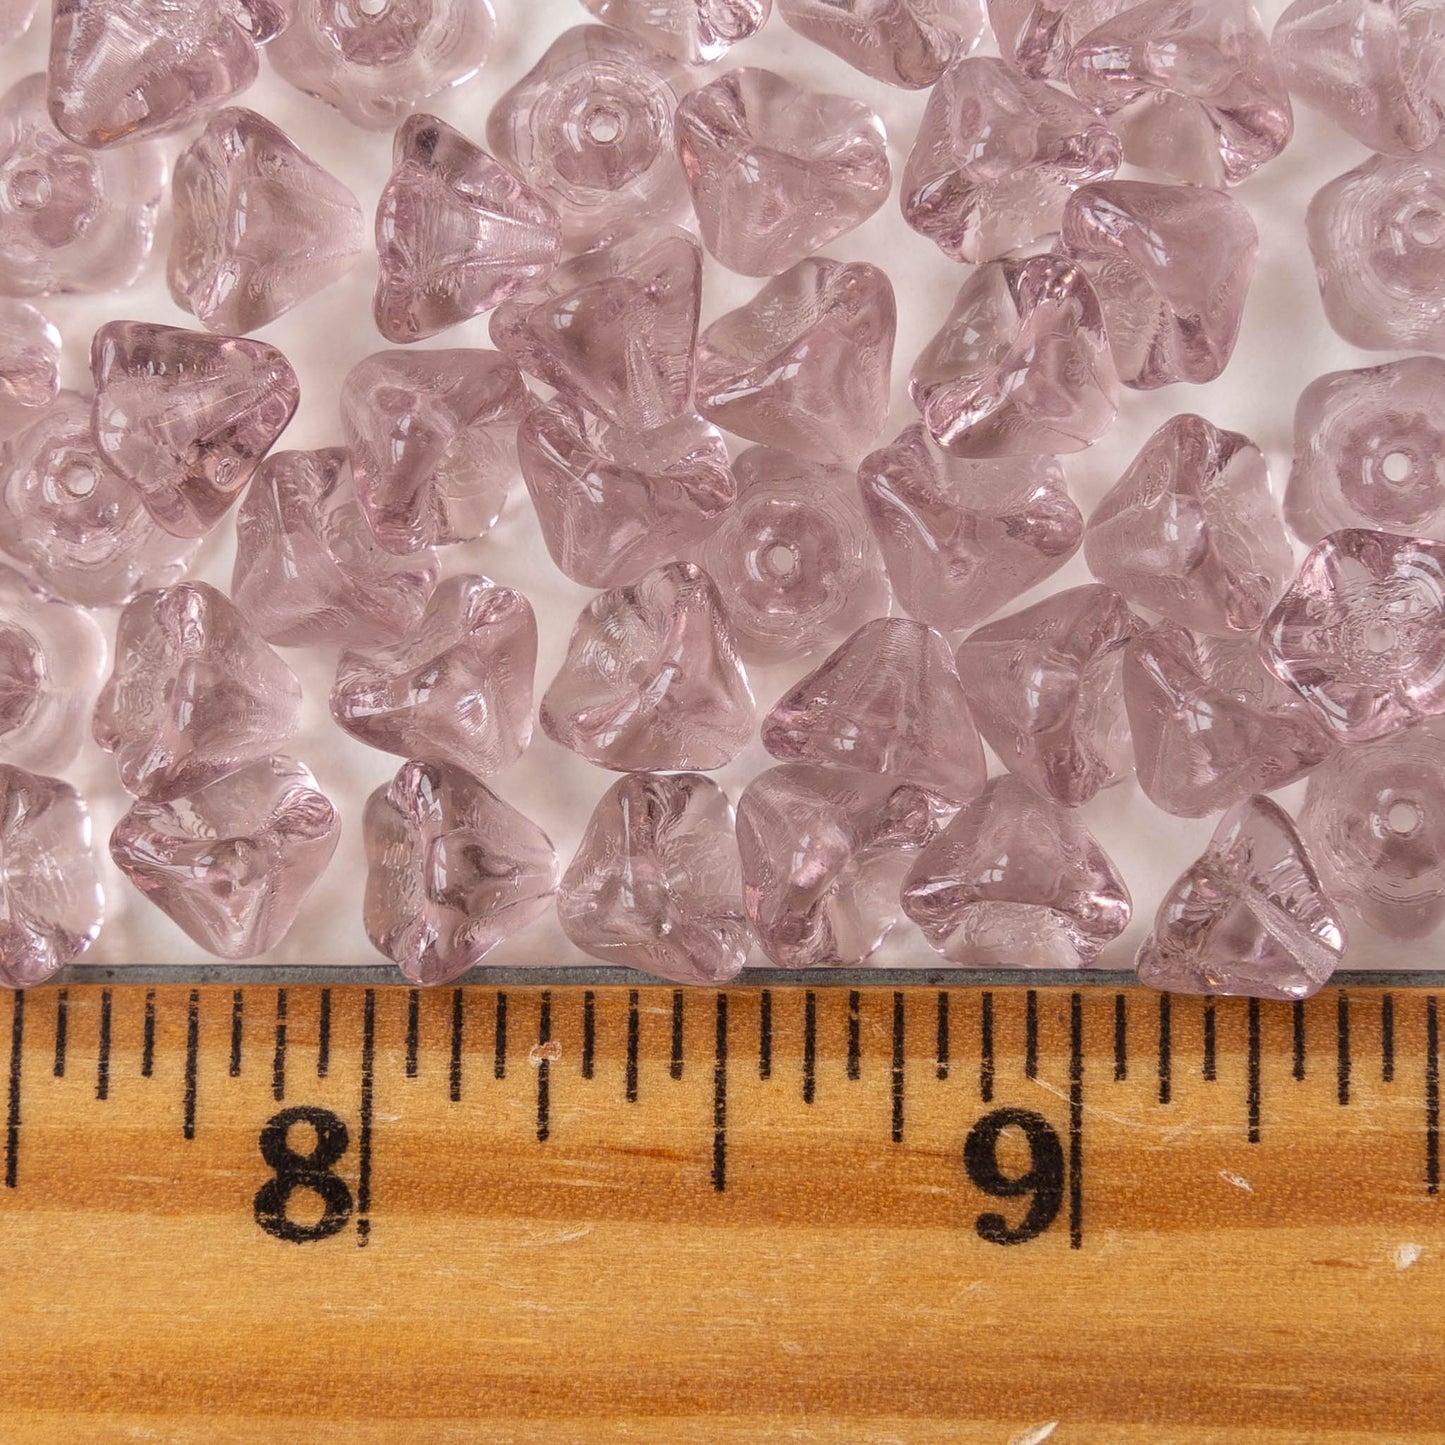 6x8mm Glass Flower Beads - Lt. Amethyst - 30